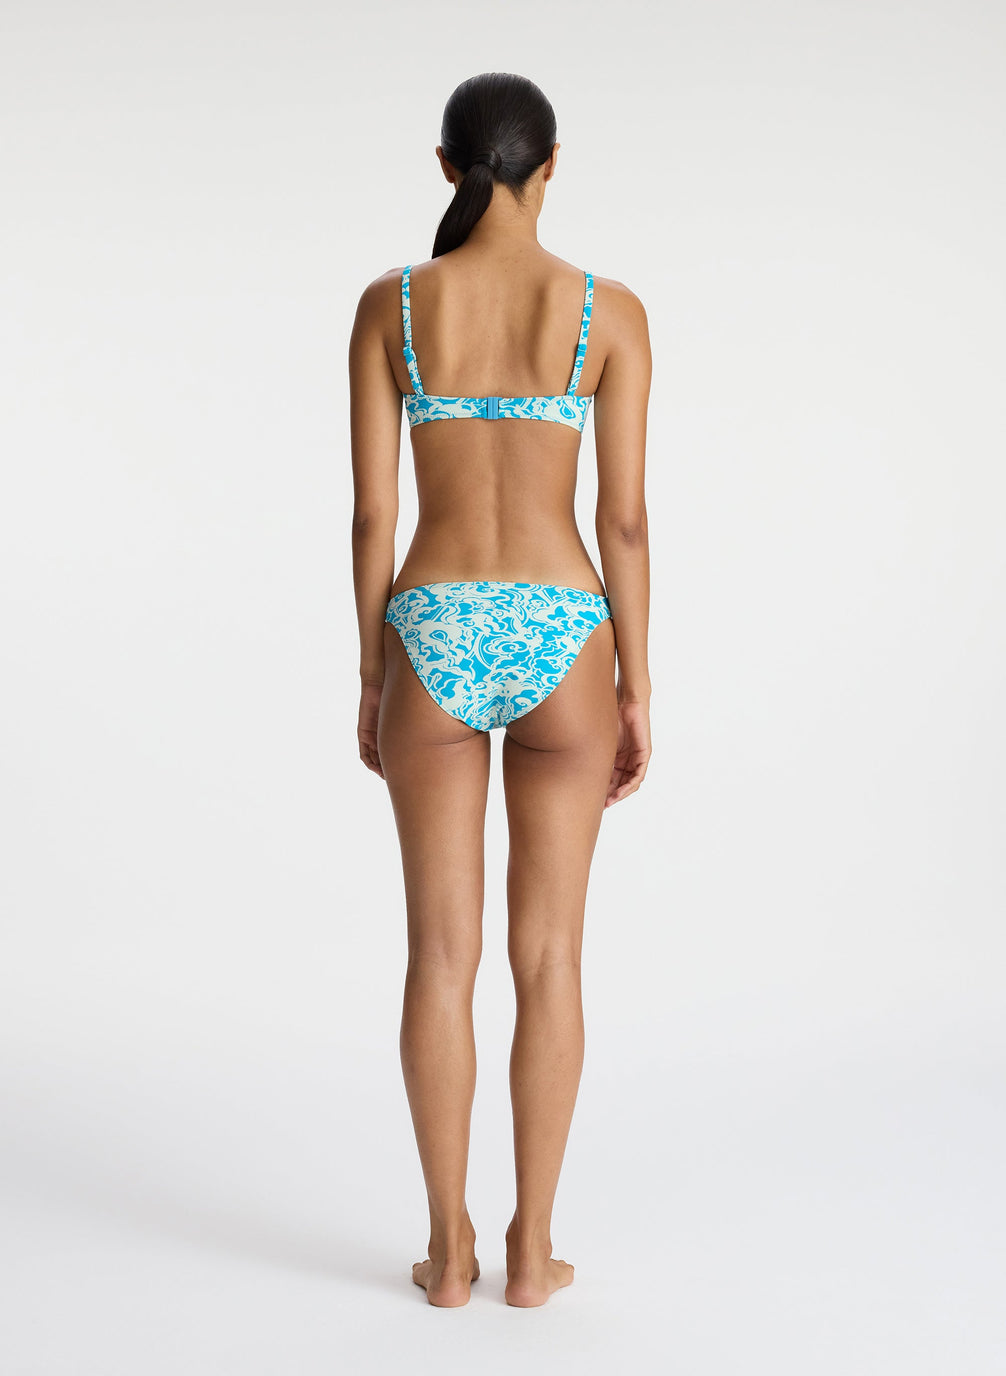 back view of woman wearing aqua printed bikini set